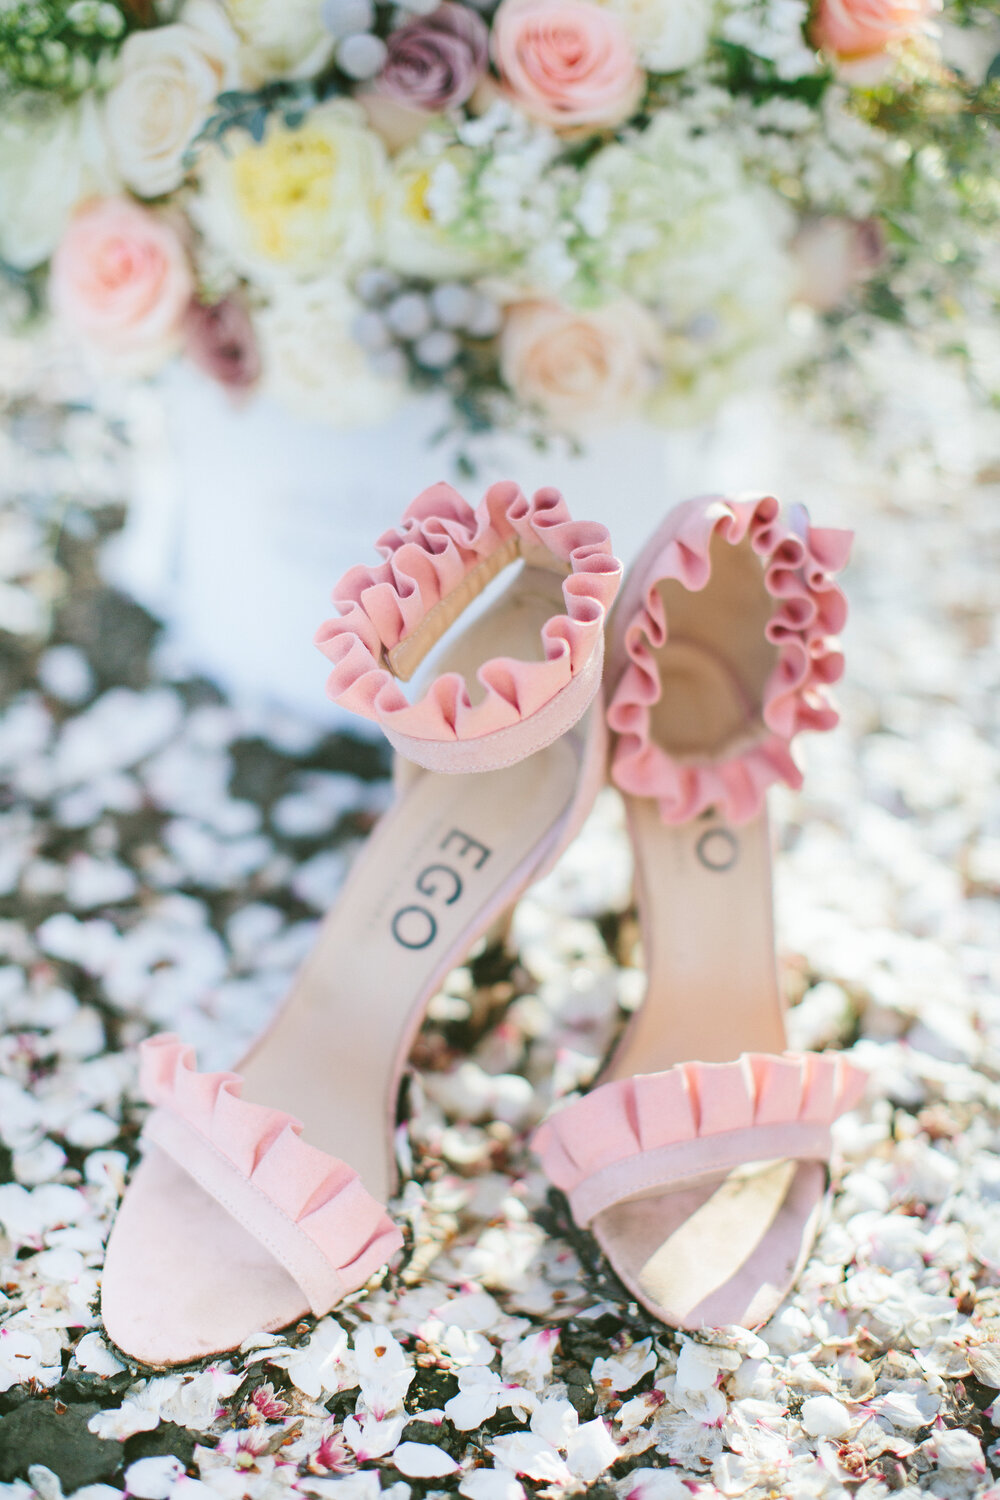 Violette-fleurs-event-design—florist-roseville-anna-perevertaylo-photography-planner-sacramento-Florist-Flowers-Classic-Wedding-design-shoes-hatbox.jpg